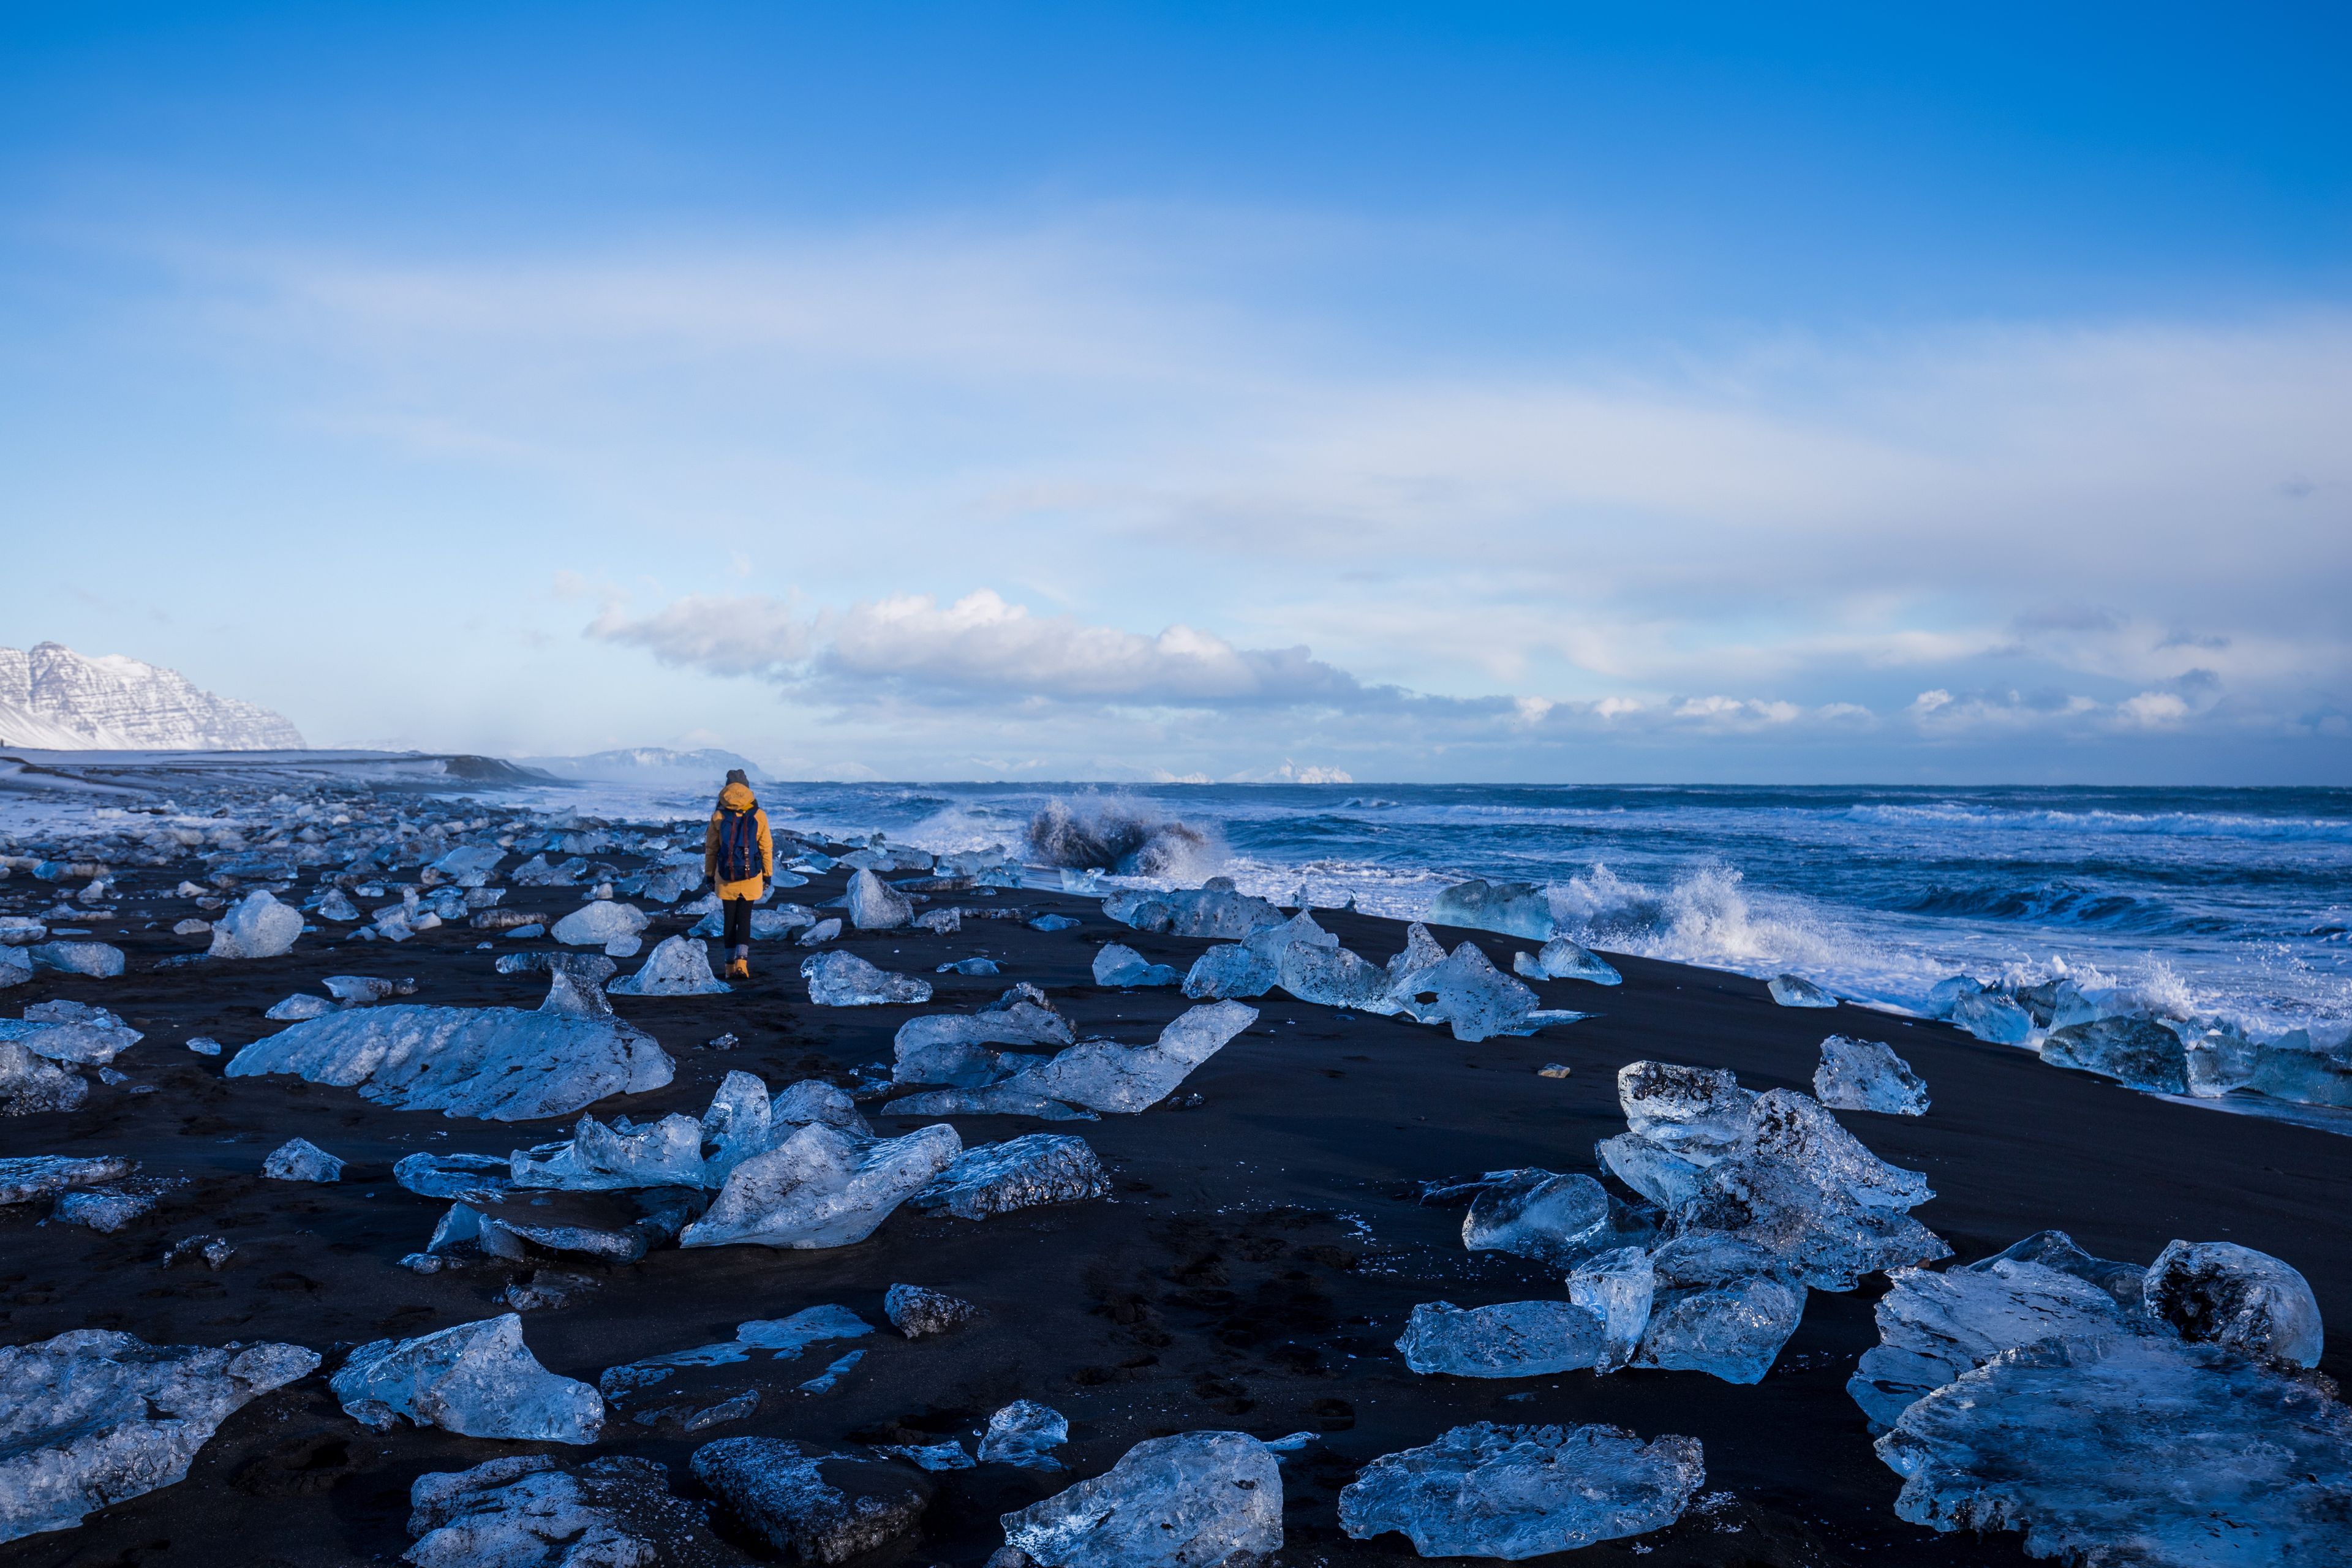 Next to the Jokulsarlon glacier, the most wonderful beach of Iceland: Diamond beach